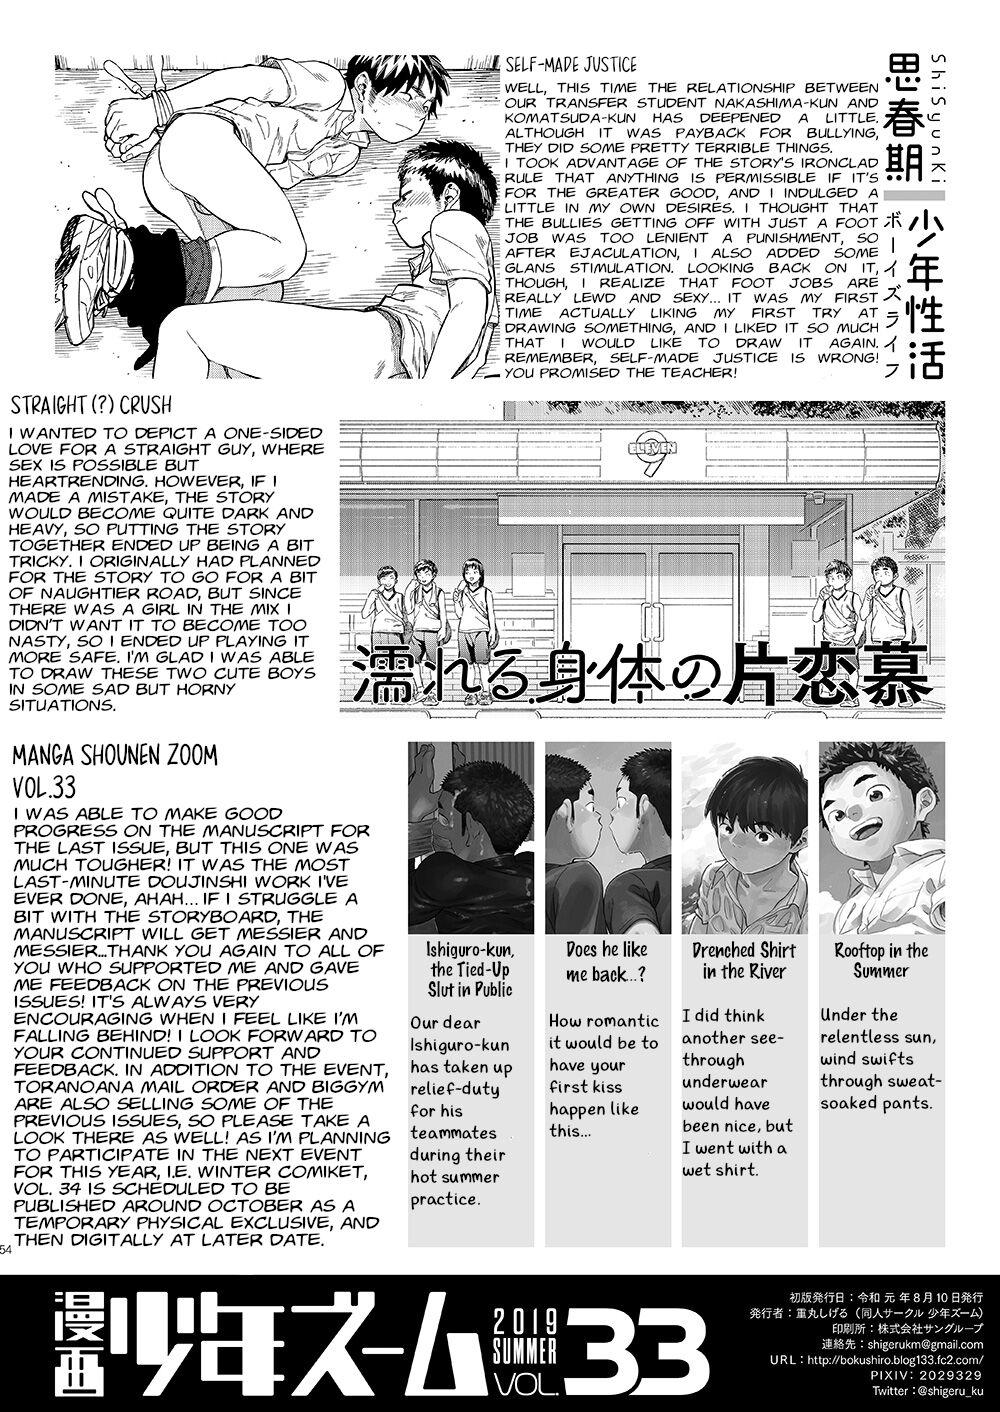 Manga Shounen Zoom Vol. 33 53